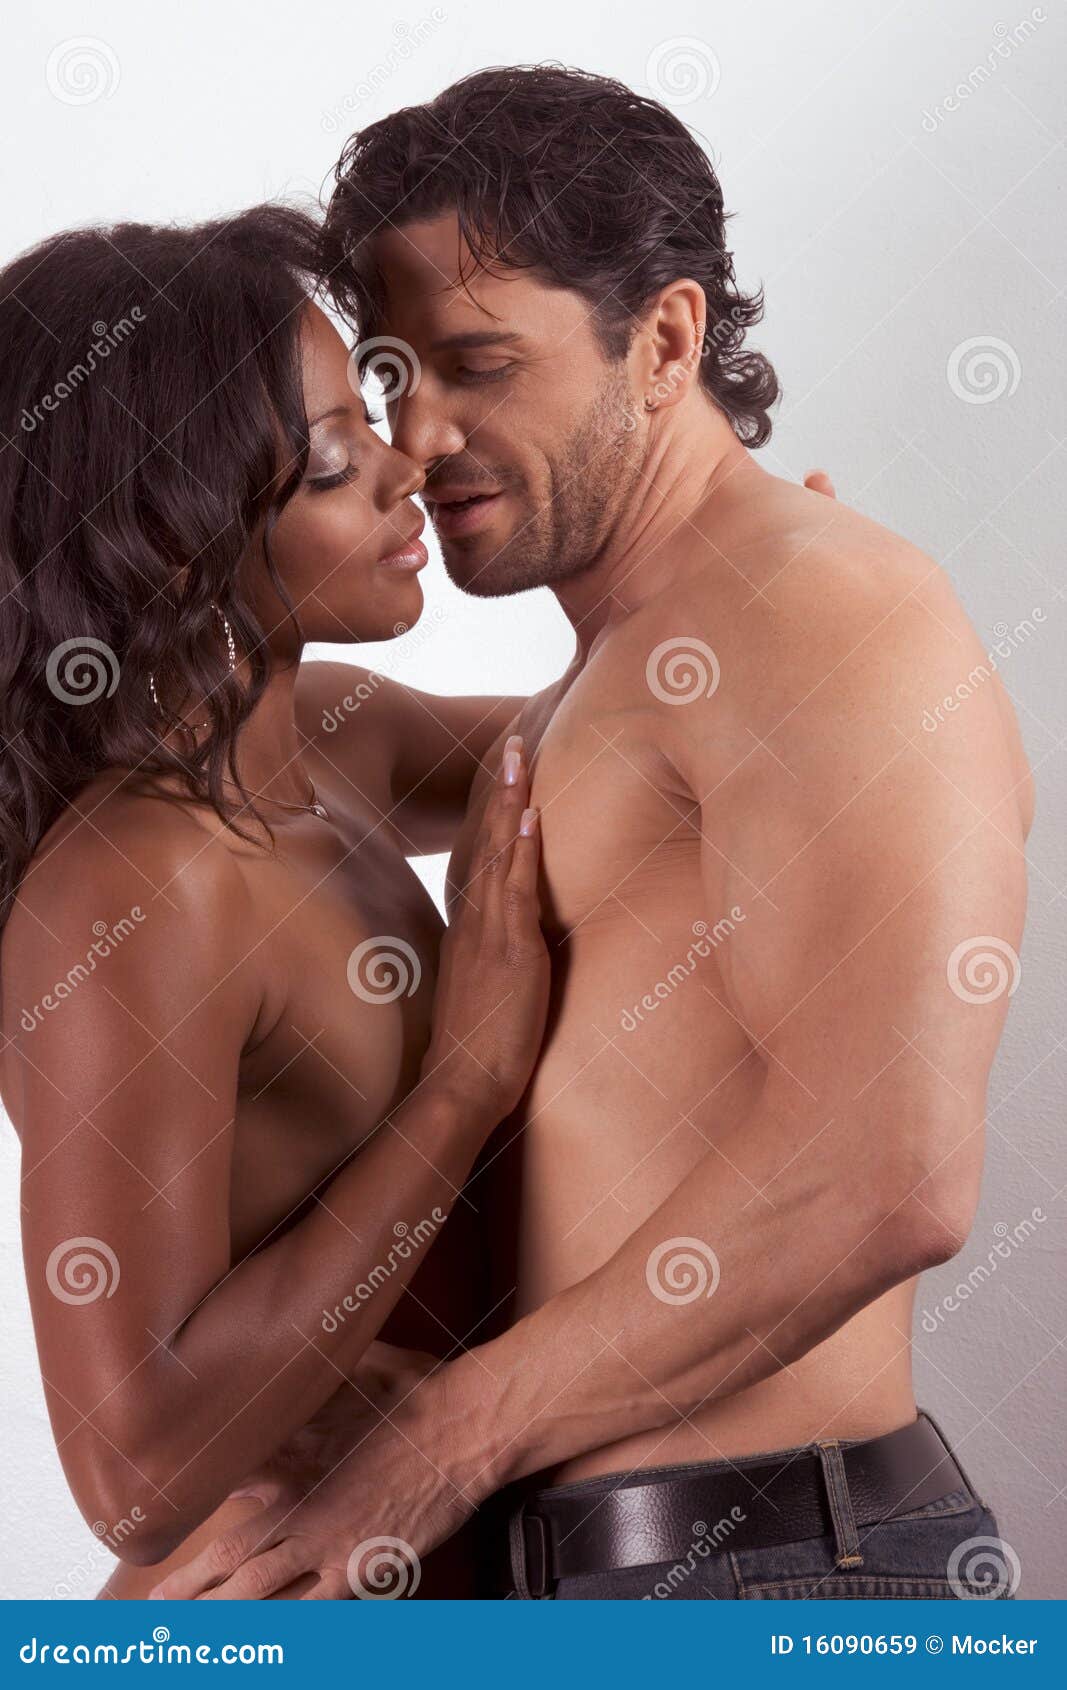 naked adult females kissing